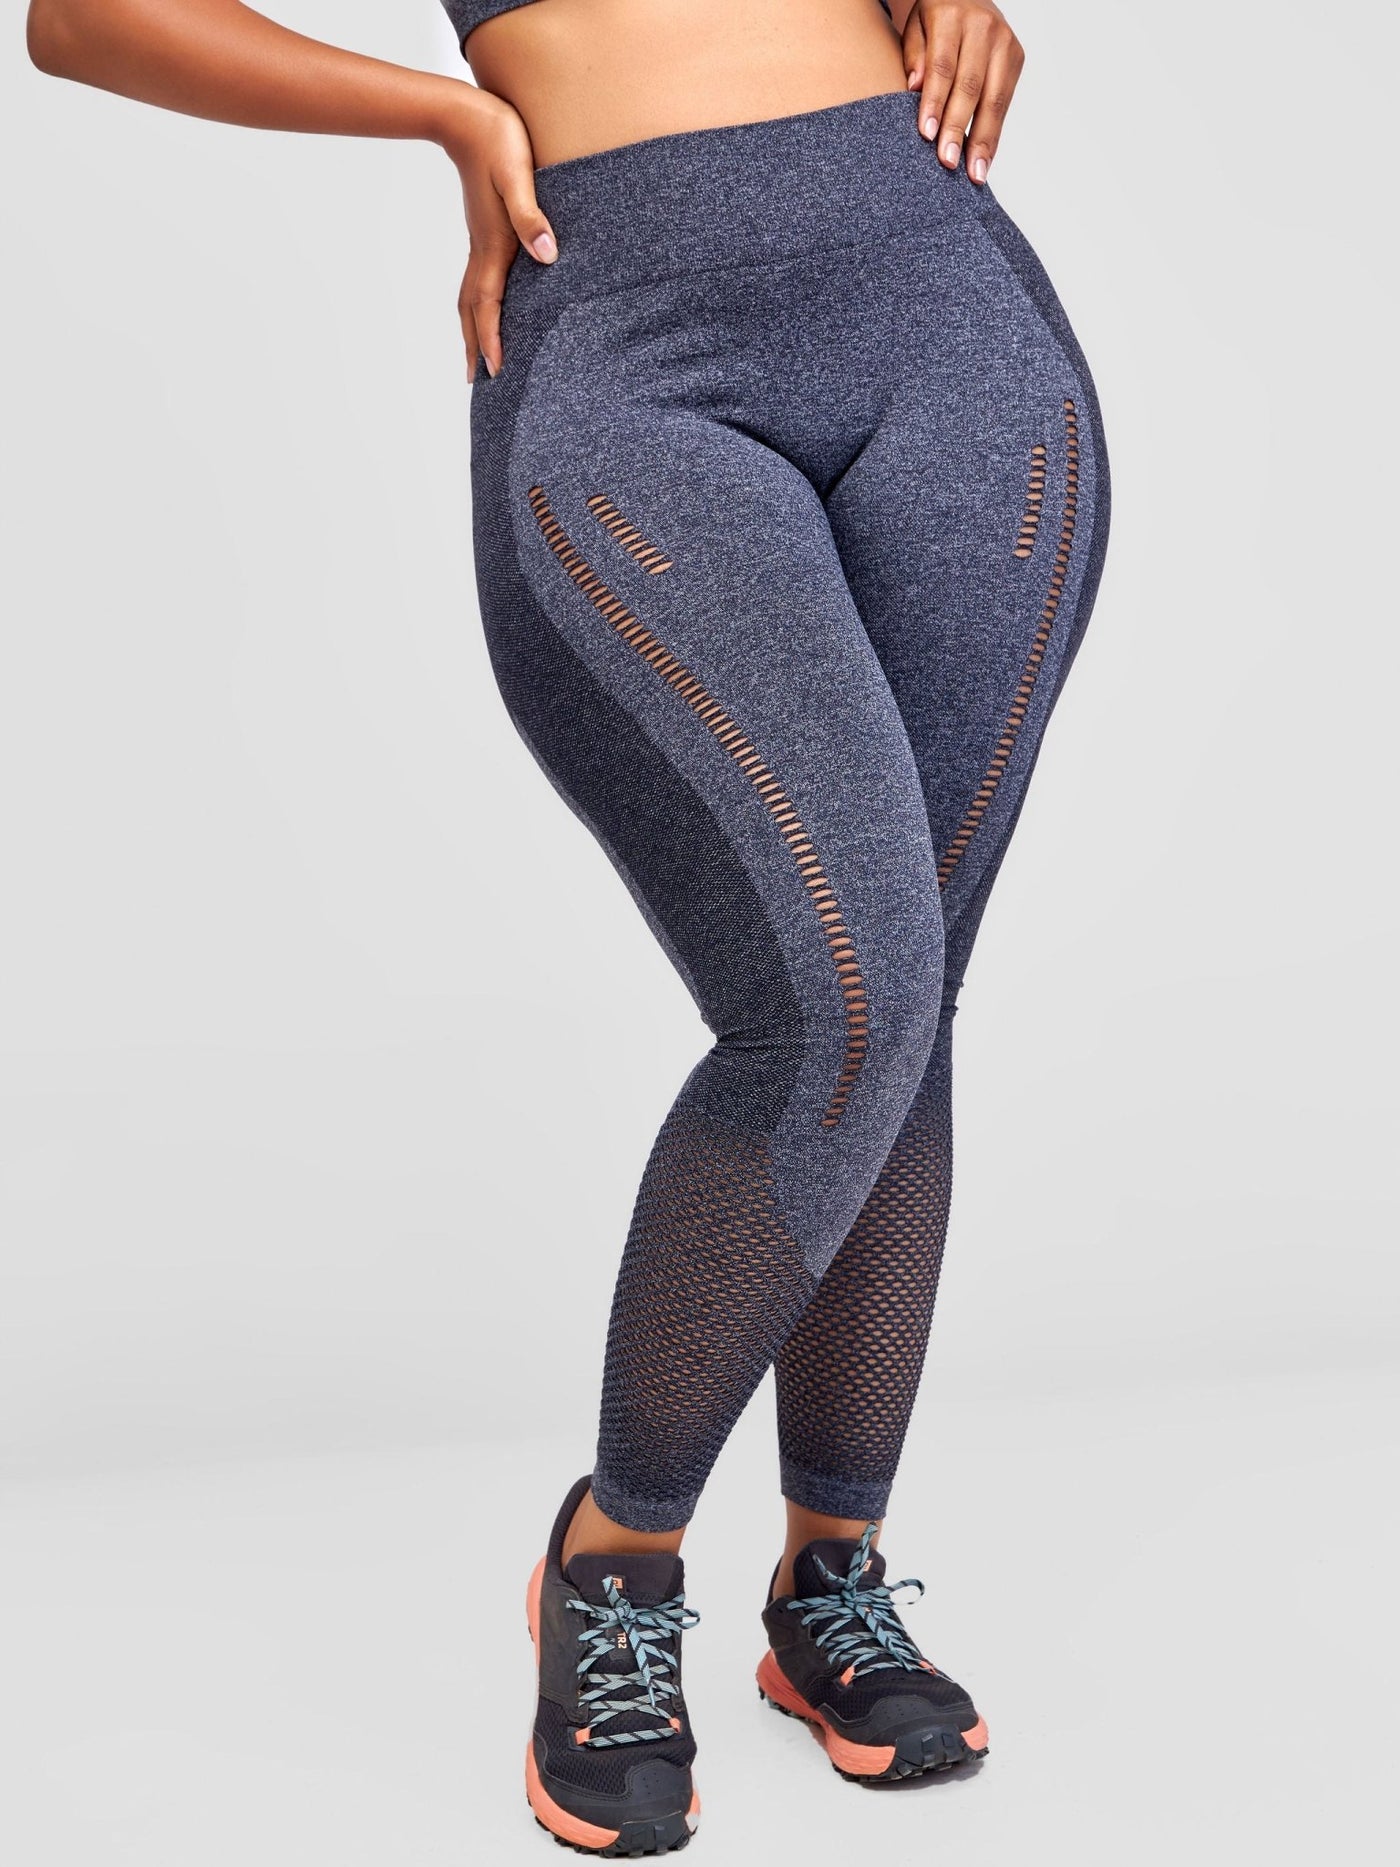 Ava Fitness Kira Pants Set - Dark Grey - Shopzetu